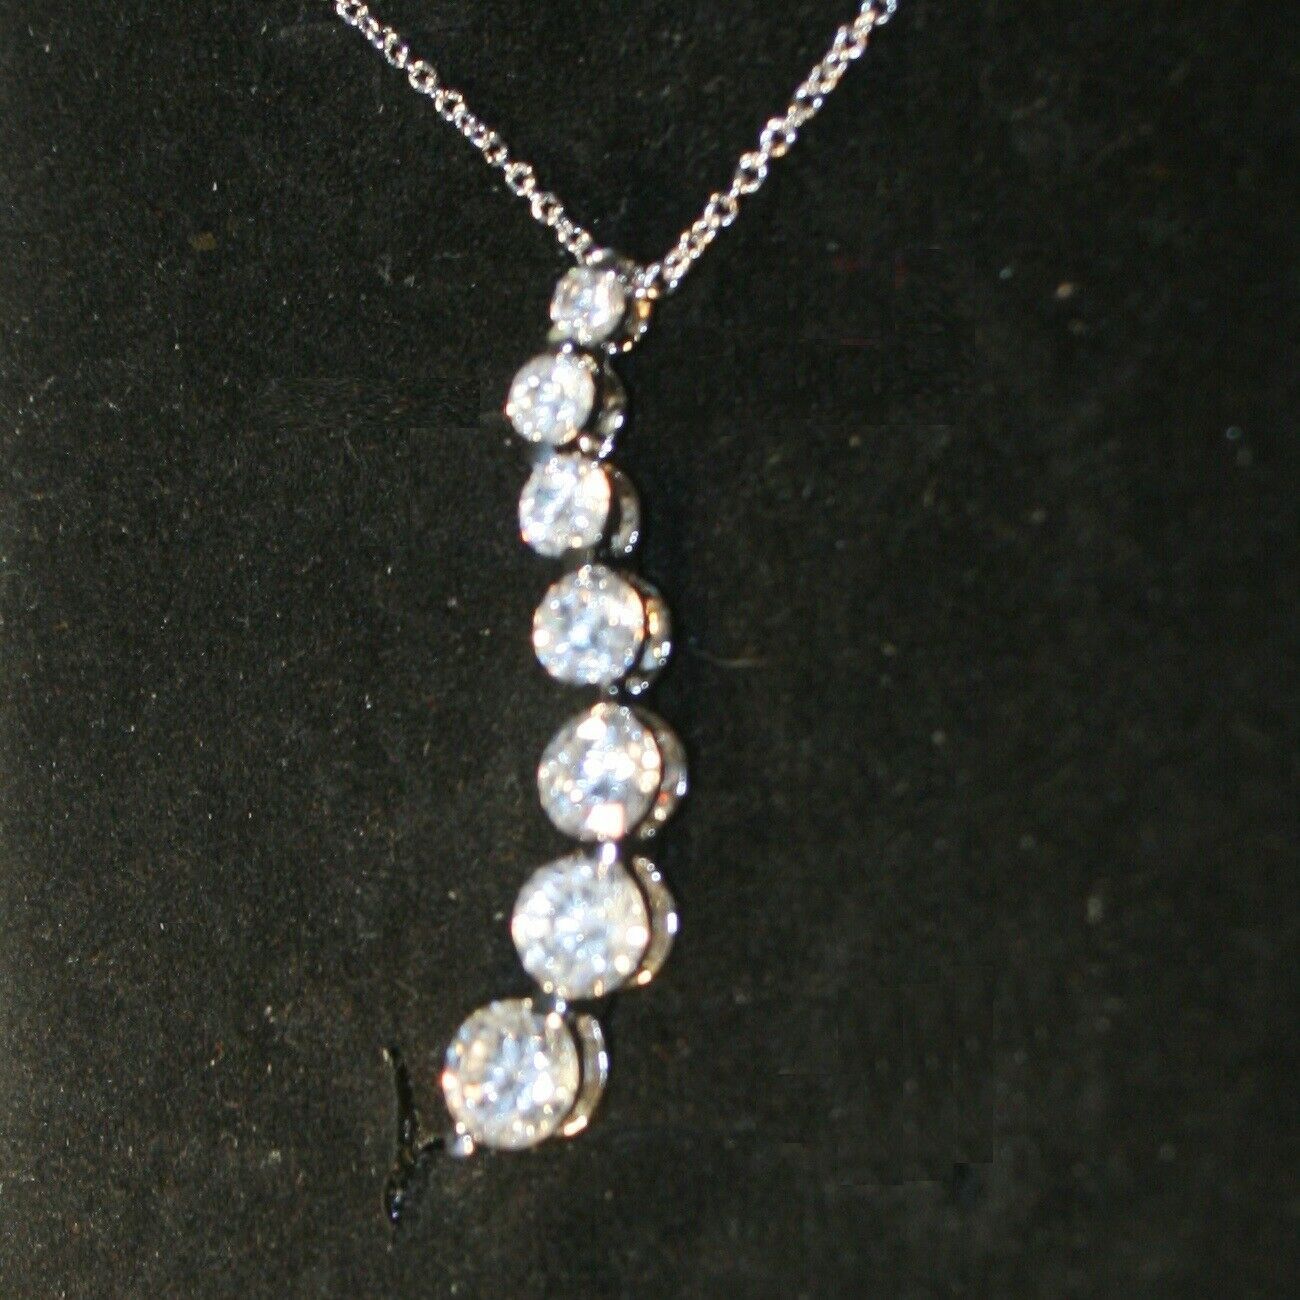 Diamond Alternatives S Journey Pendant Necklace 14k White Gold over 925 SS - $58.19